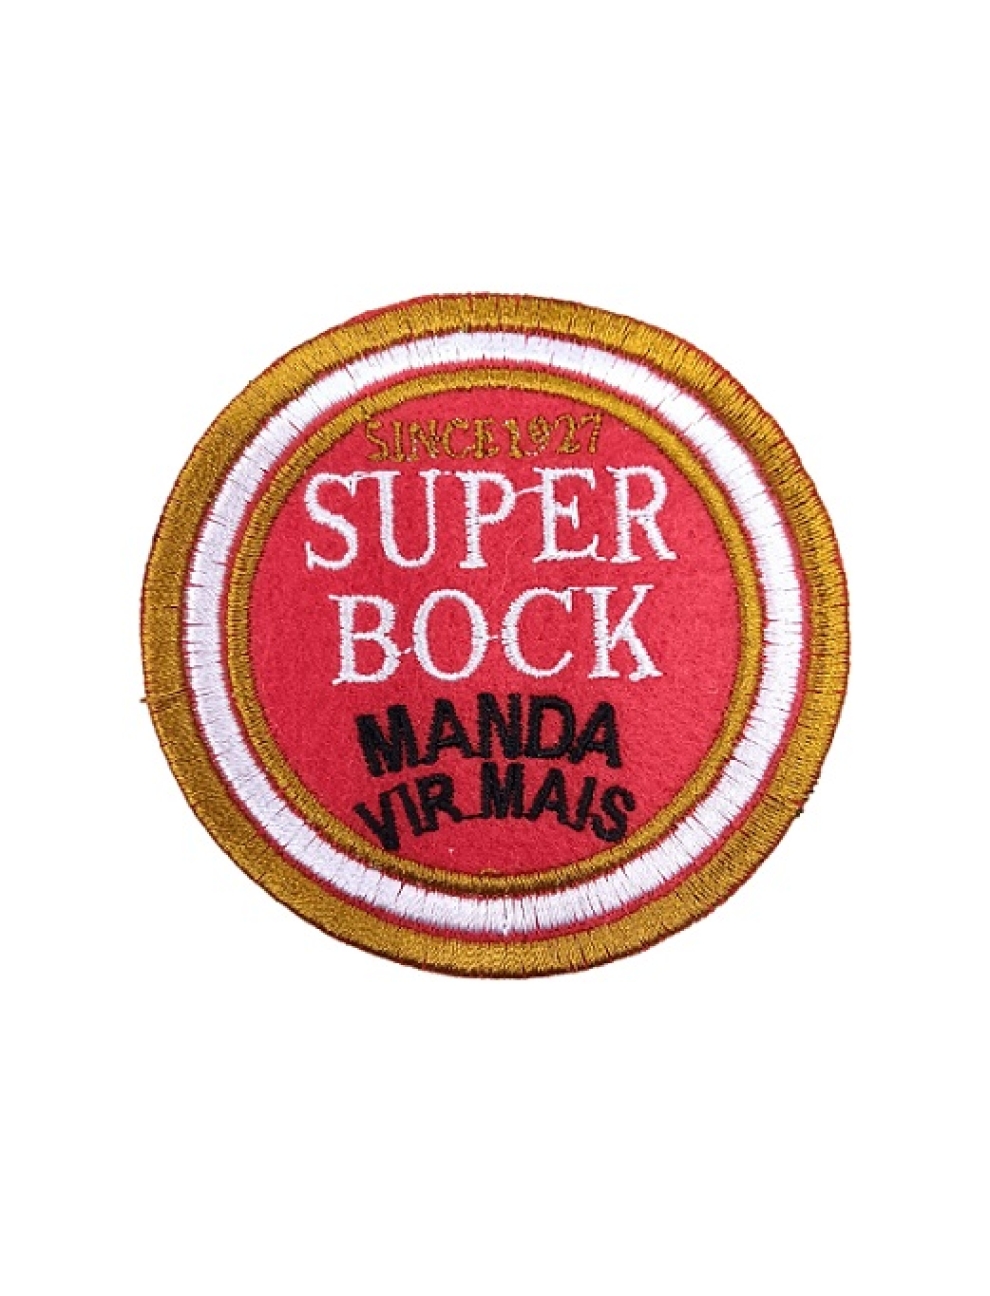 Super Bock - Manda vir mais